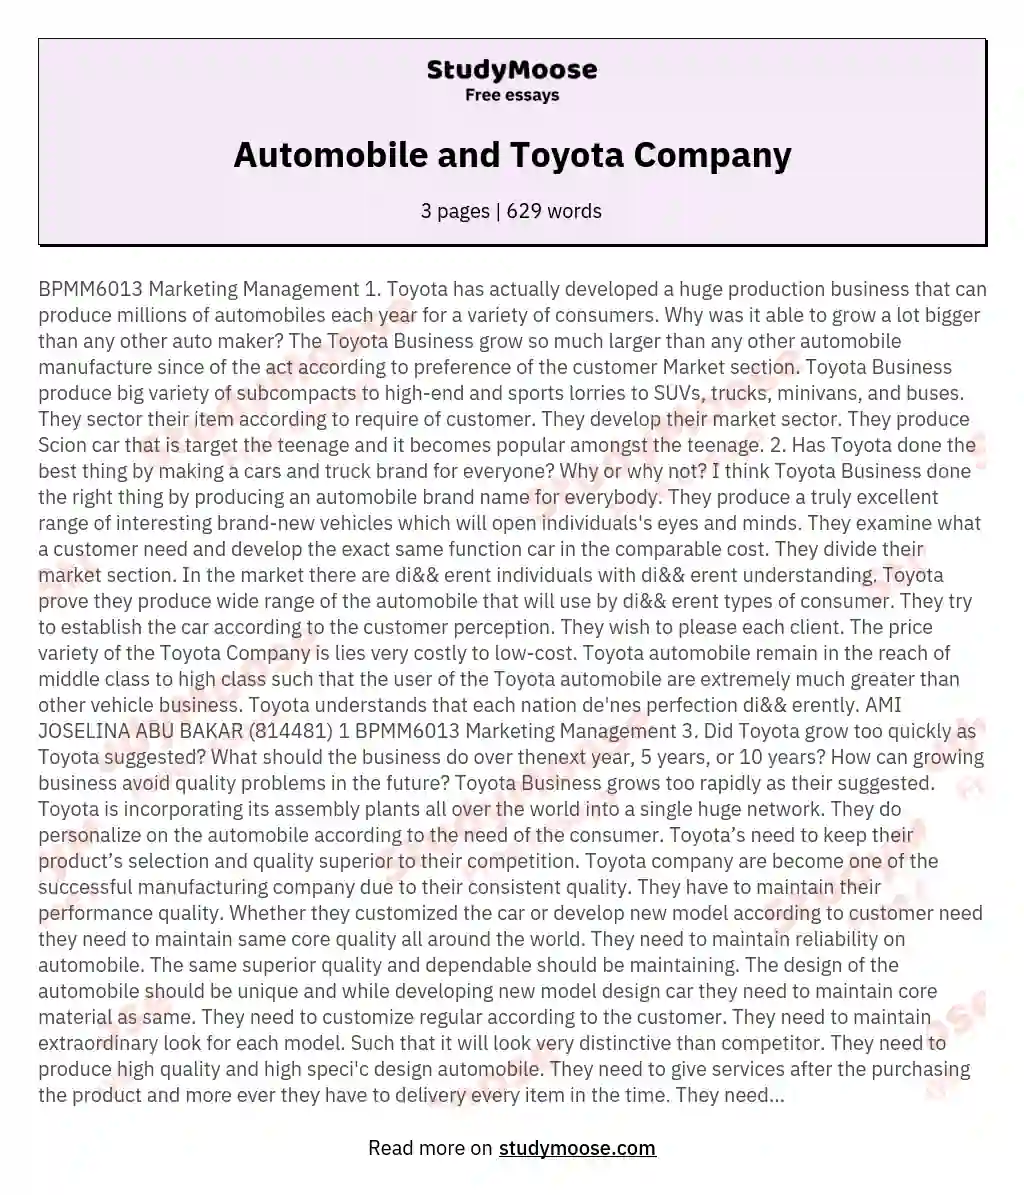 Automobile and Toyota Company essay